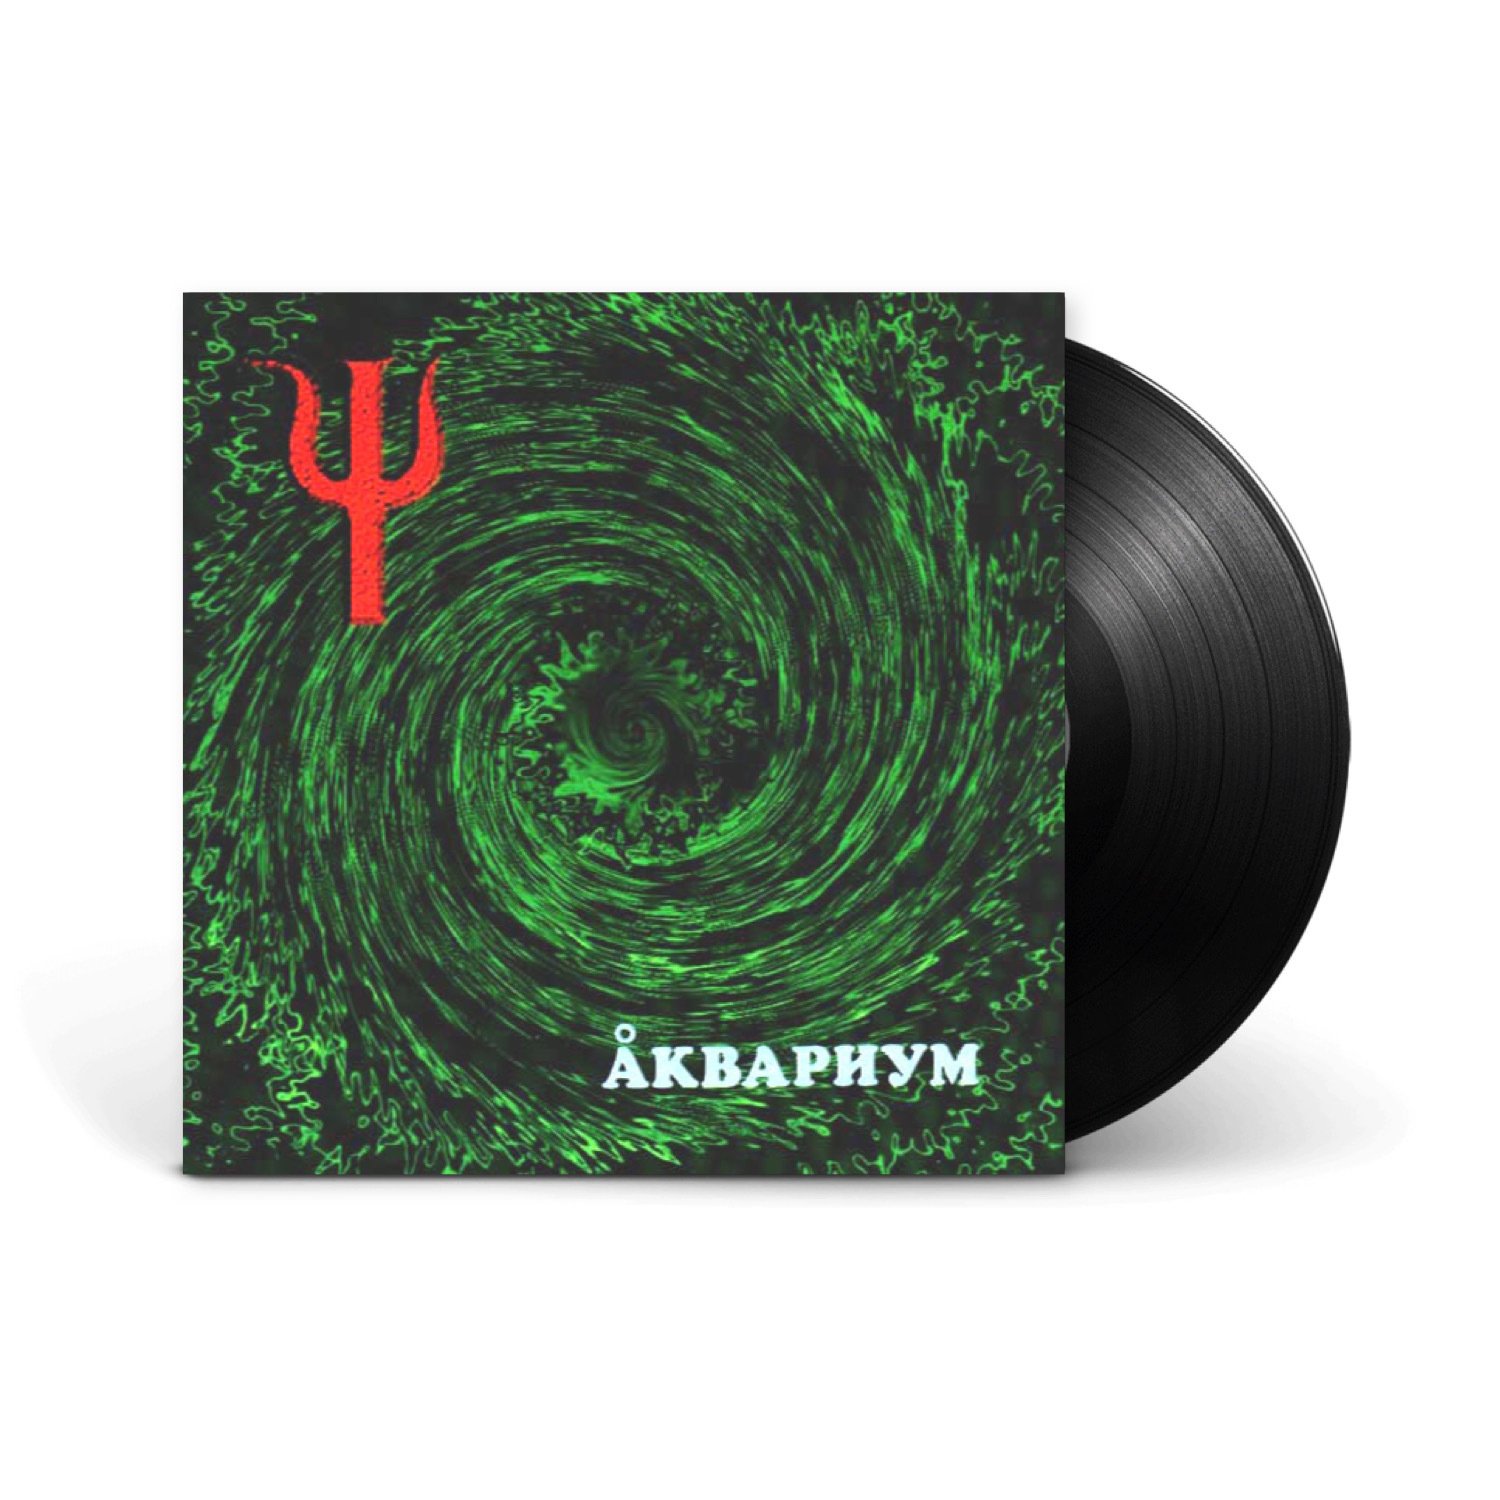 Виниловая пластинка LP: Аквариум — «Ψ» Пси (1999/2014) [Black Vinyl]